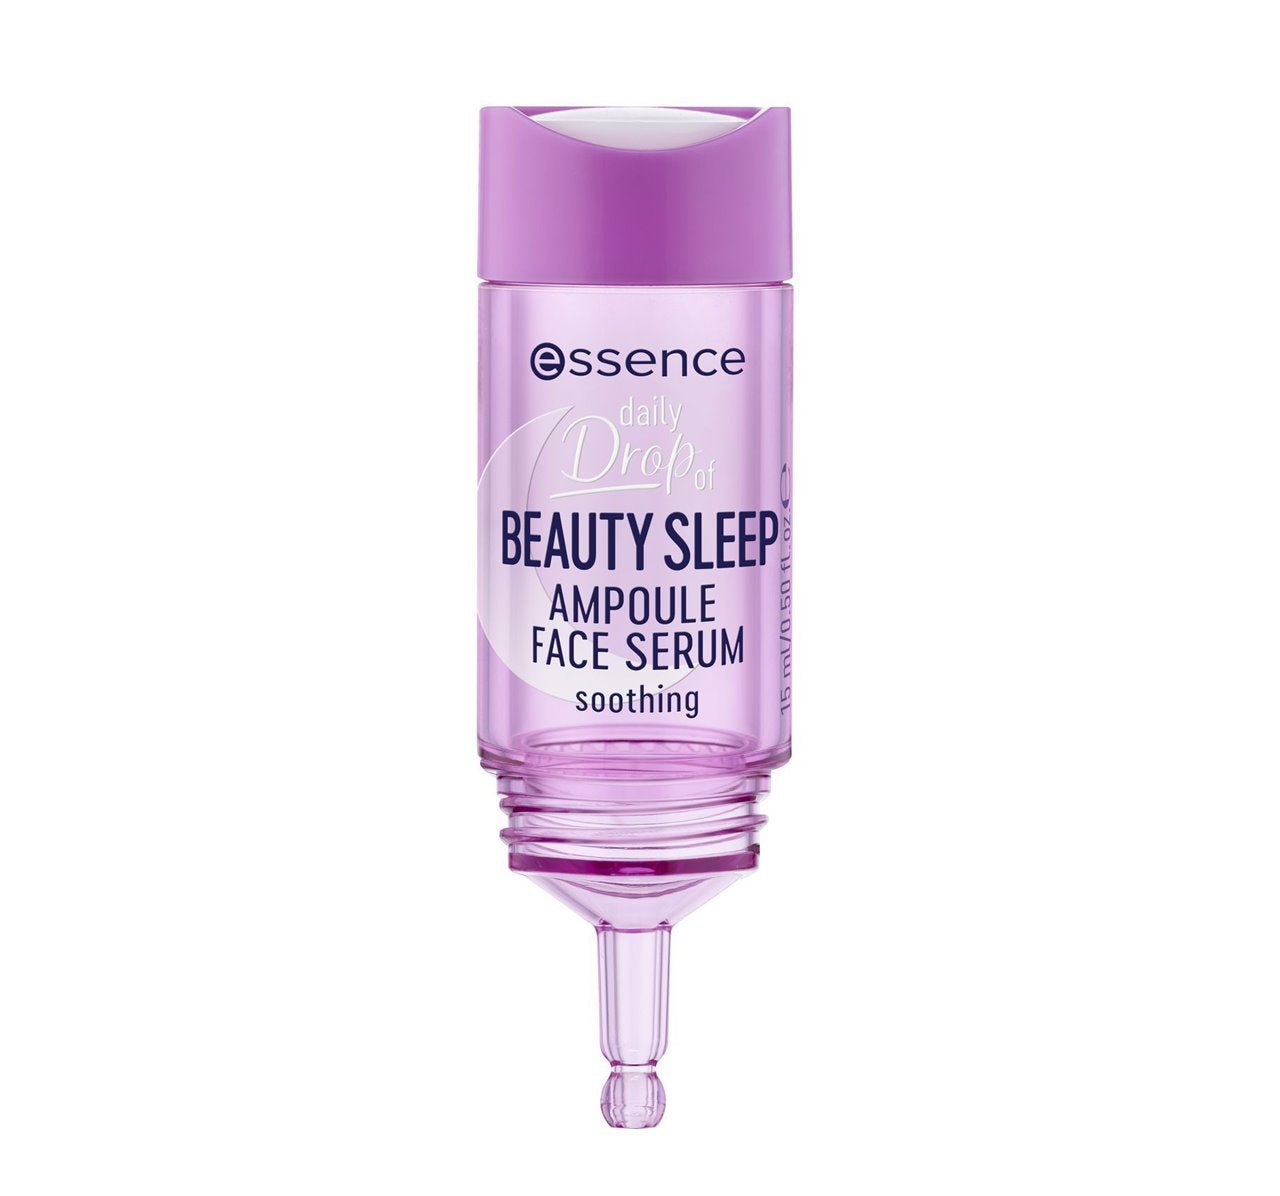 Essence daily Drop Of Beauty Sleep Ampoule Face Serum 15ml ايسنس سيروم العناية بالبشرة - #موغامبو ستور#